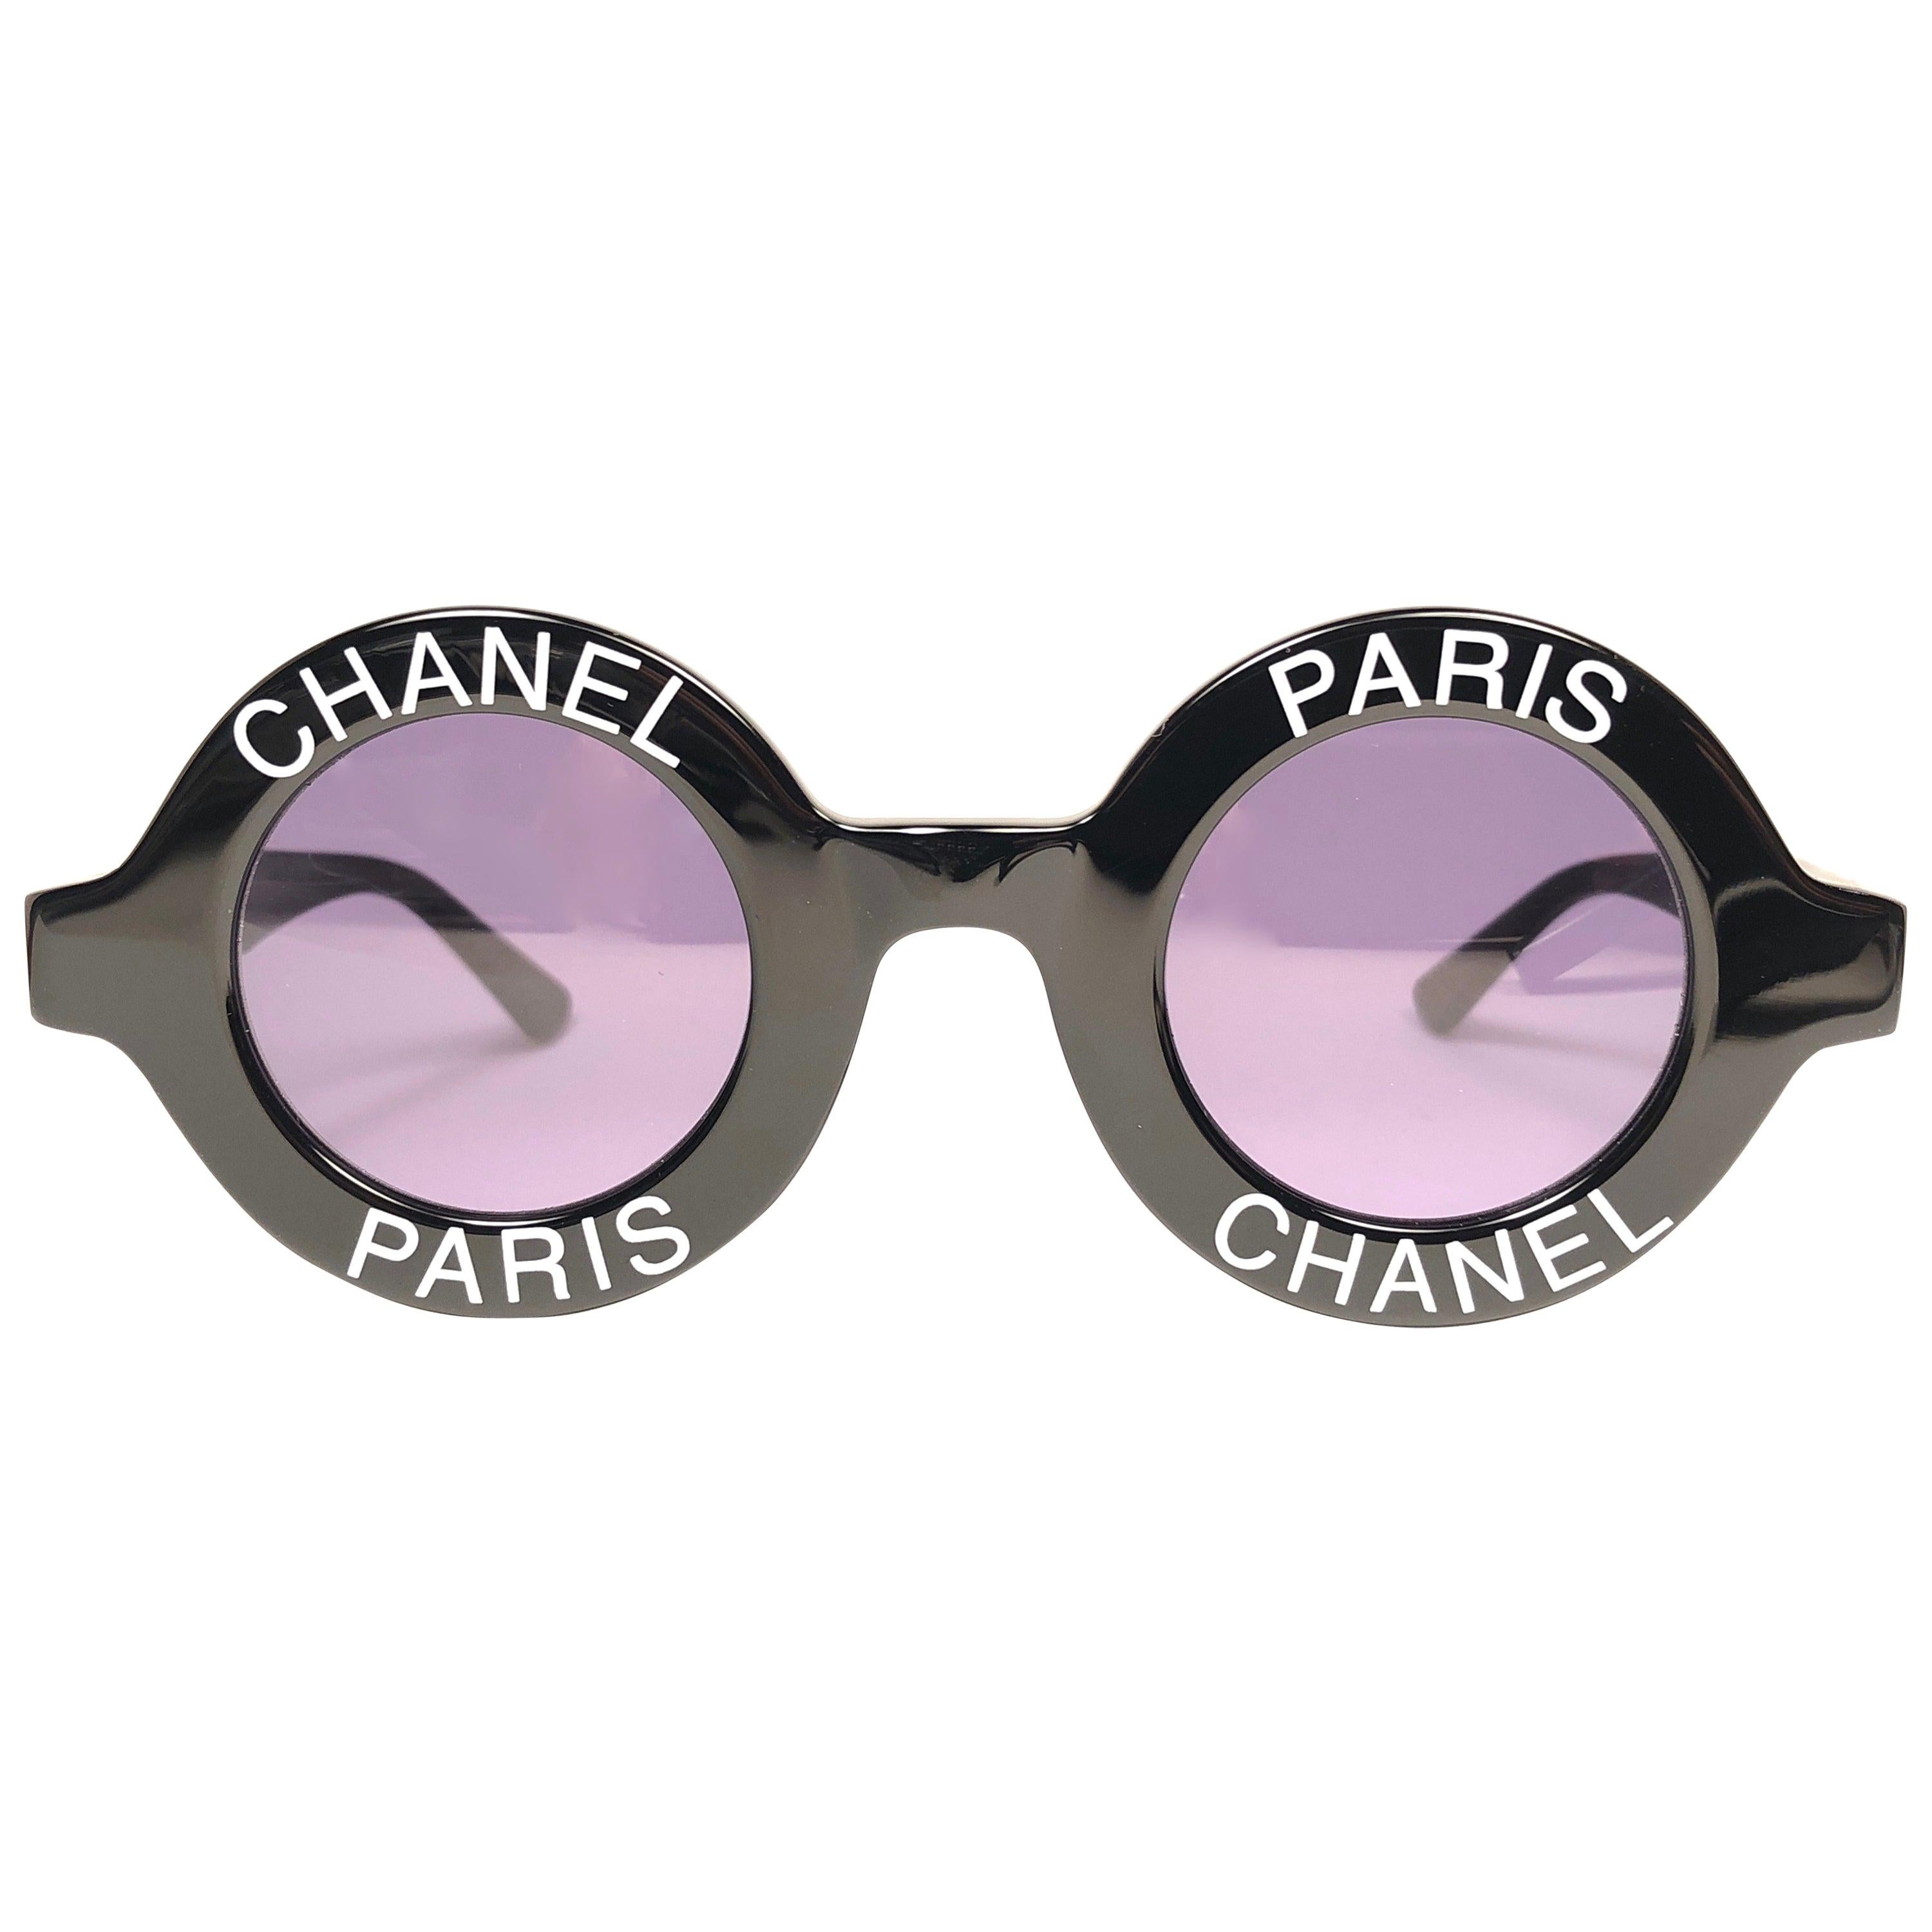 Shop CHANEL Round Sunglasses by Joyfully